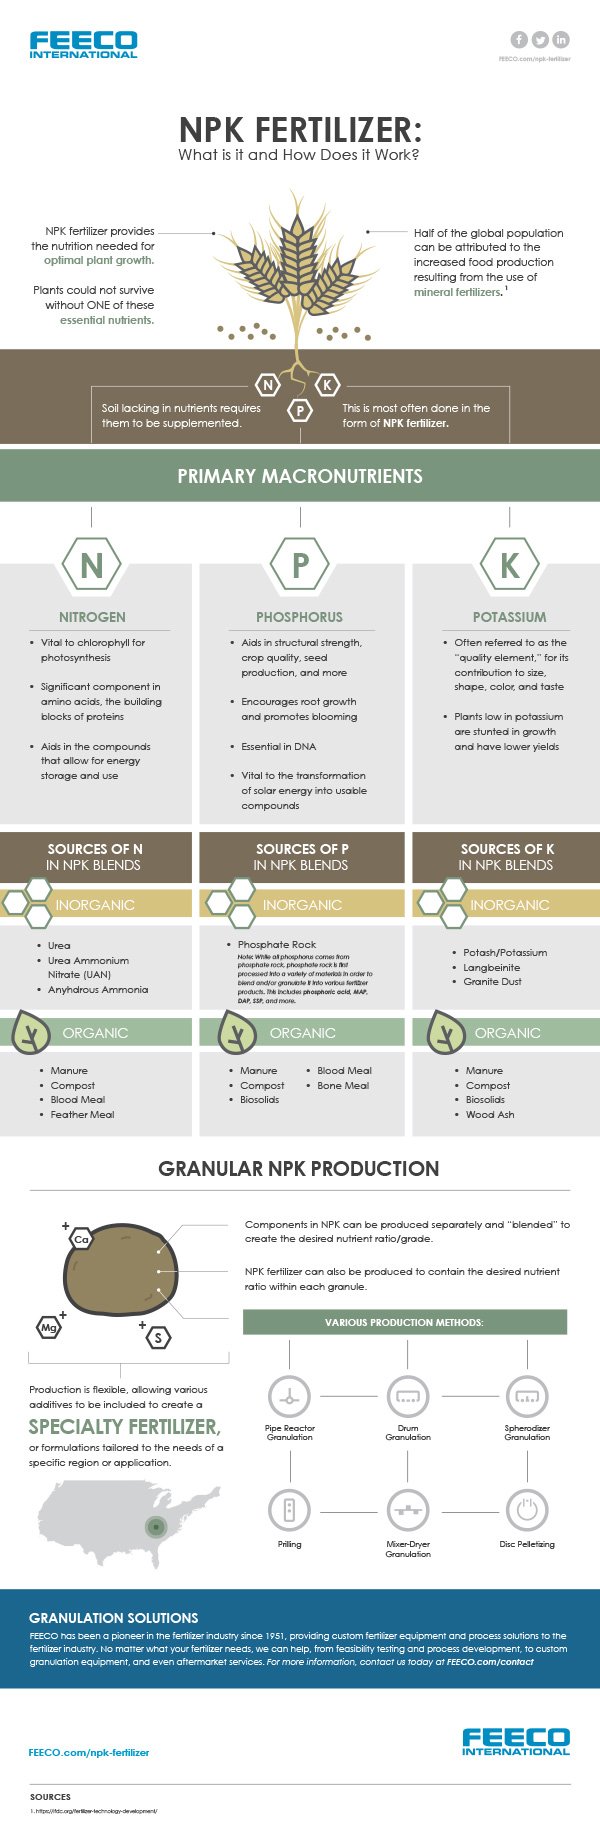 NPK Fertilizer (Fertiliser): What is it and How Does it Work (Infographic)